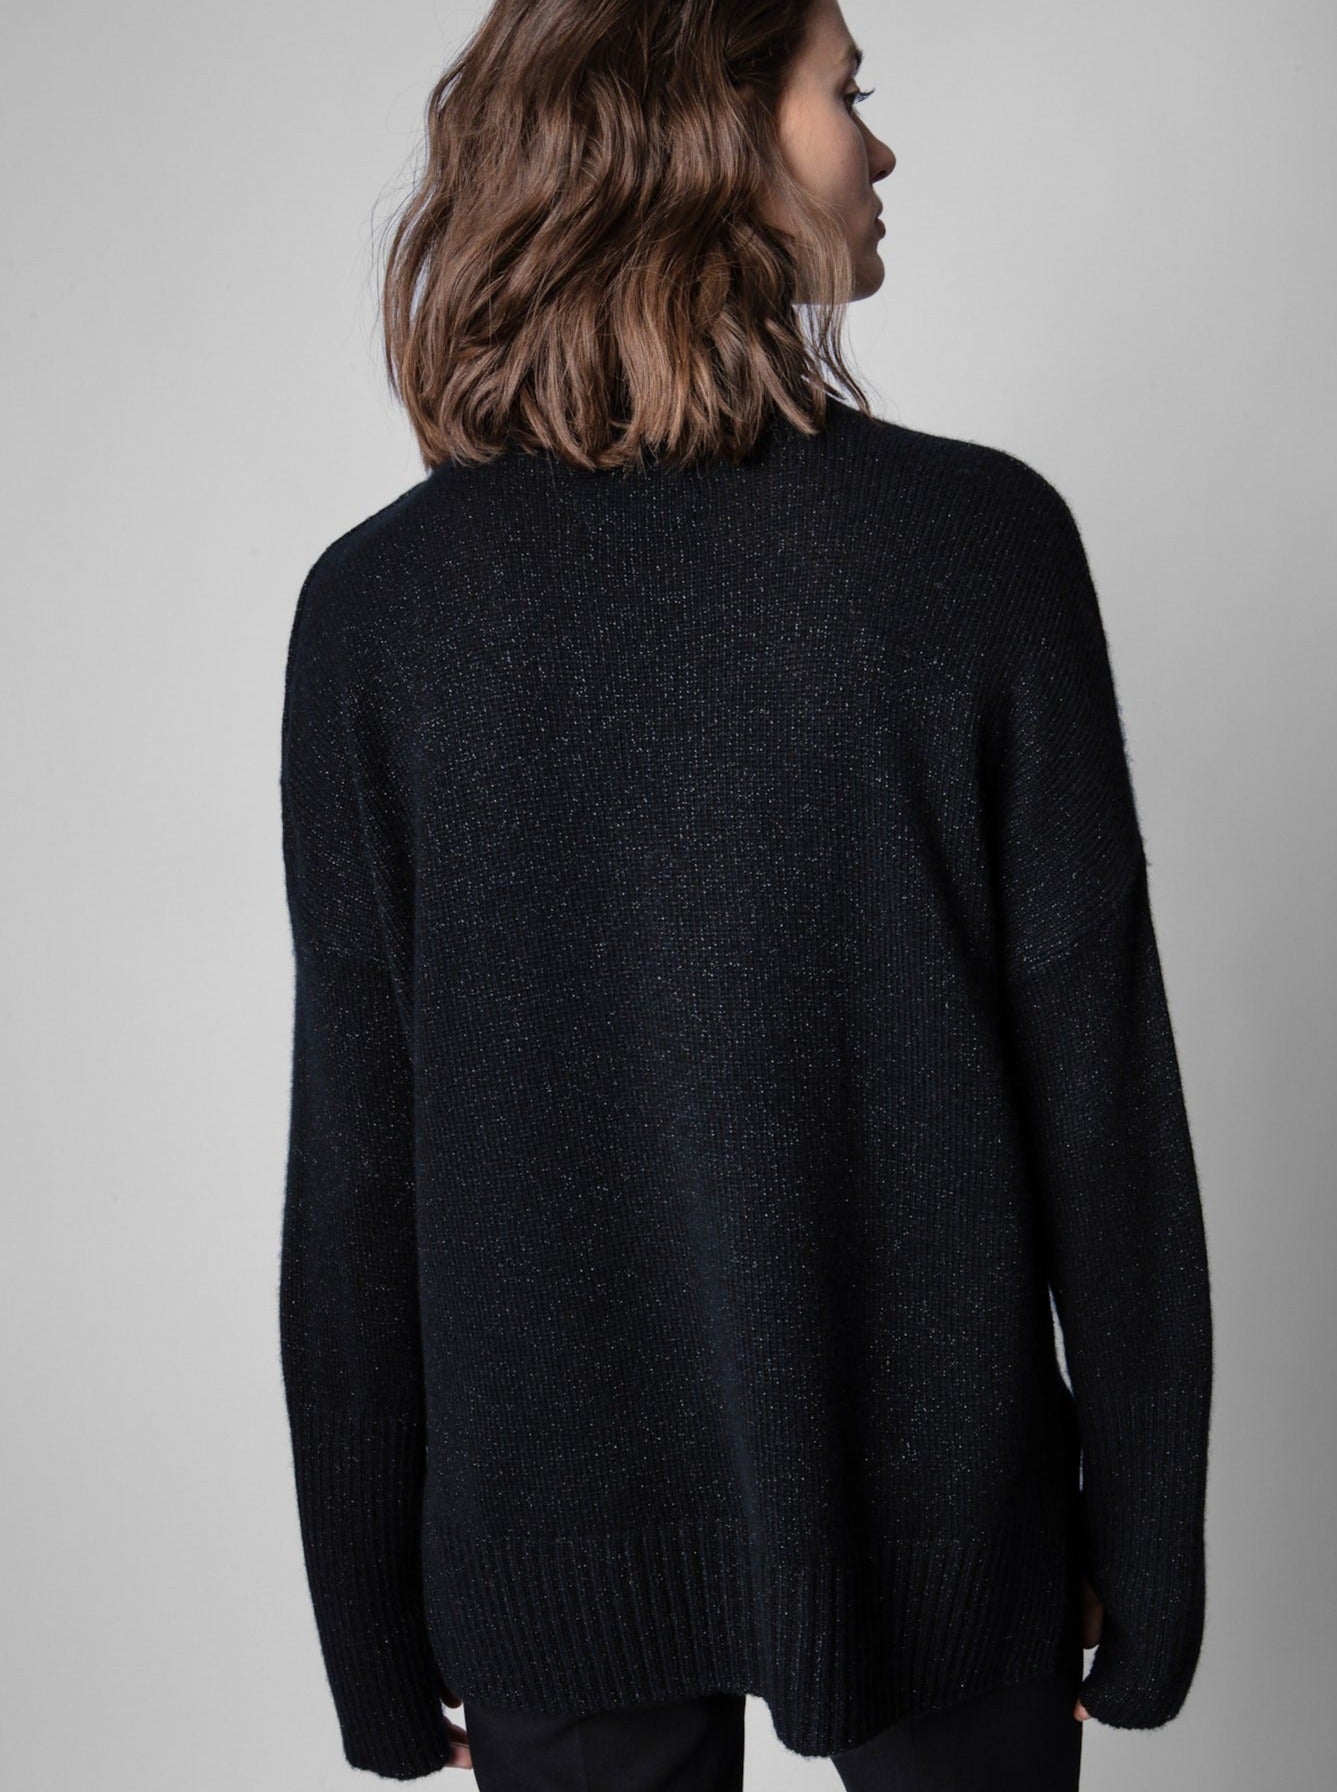 ALMA BIJOUX sweater, black